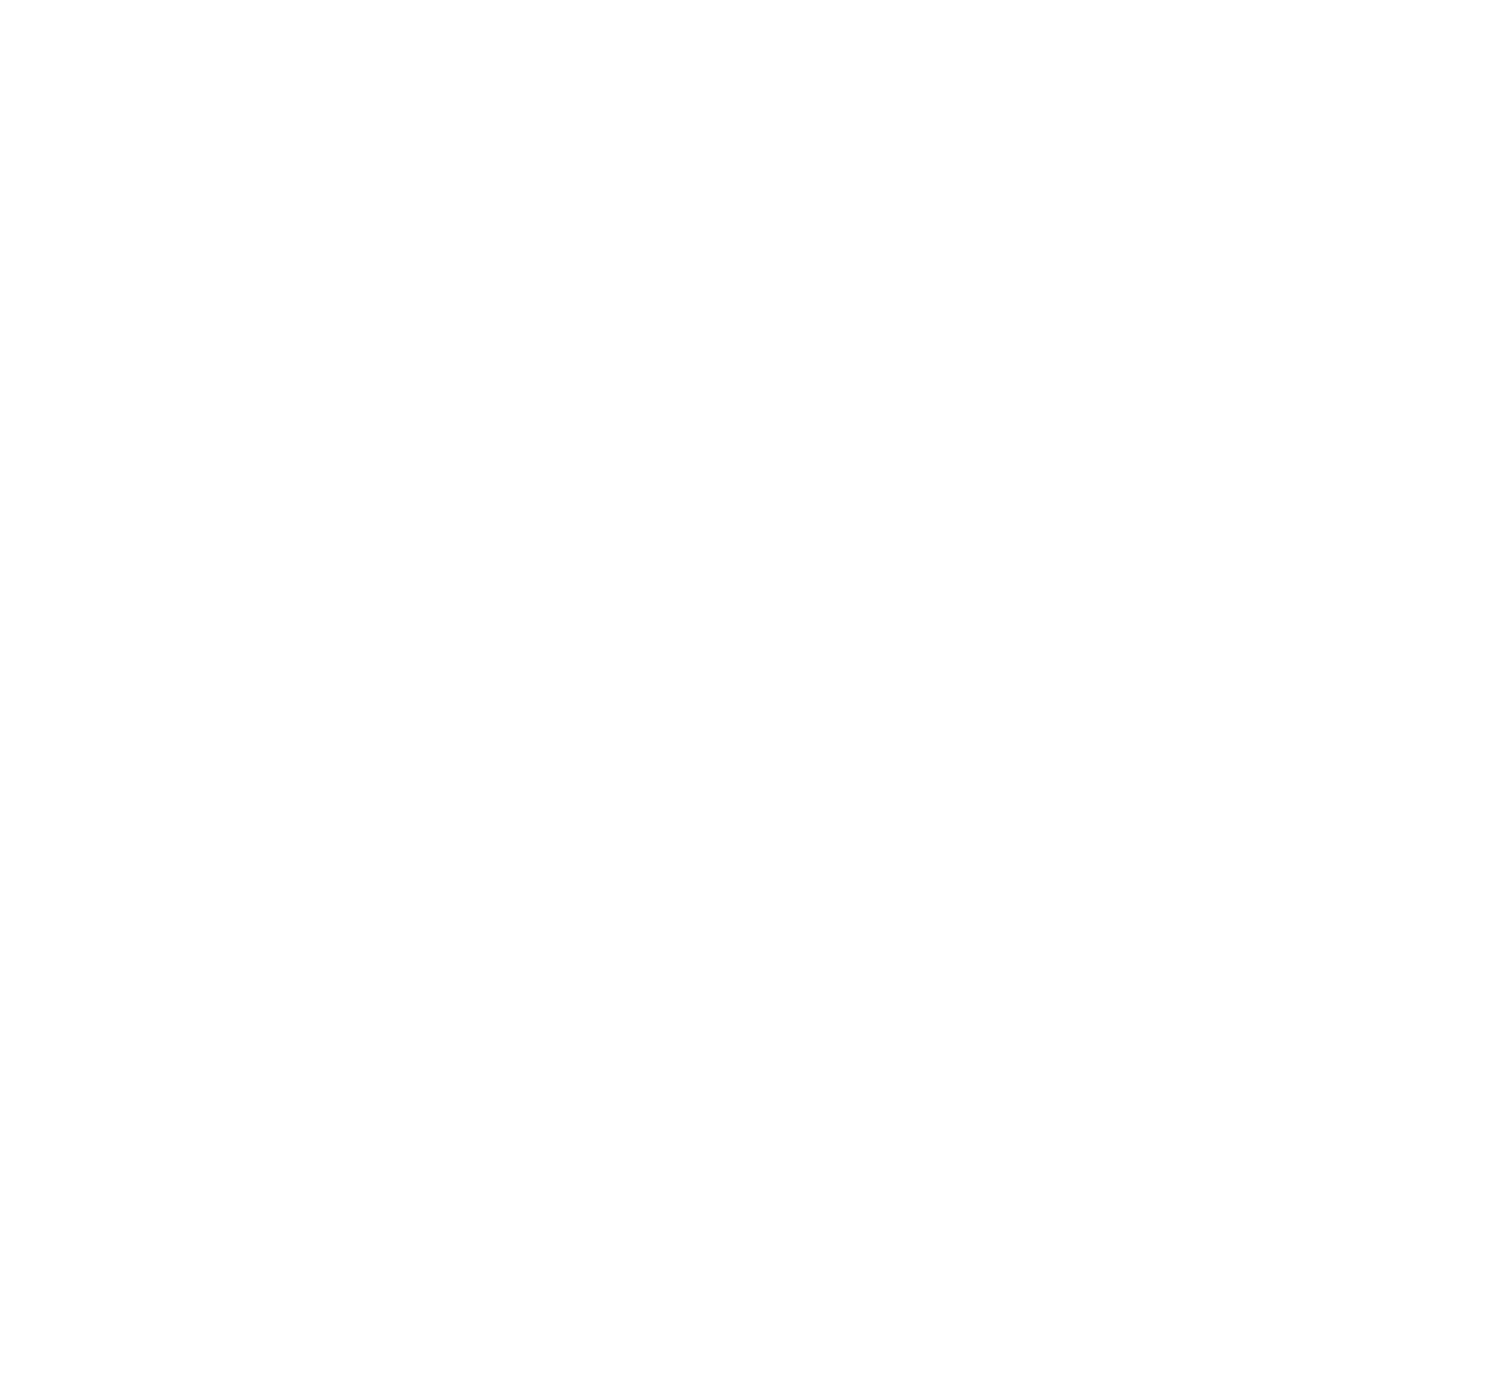 Regan Strand Productions